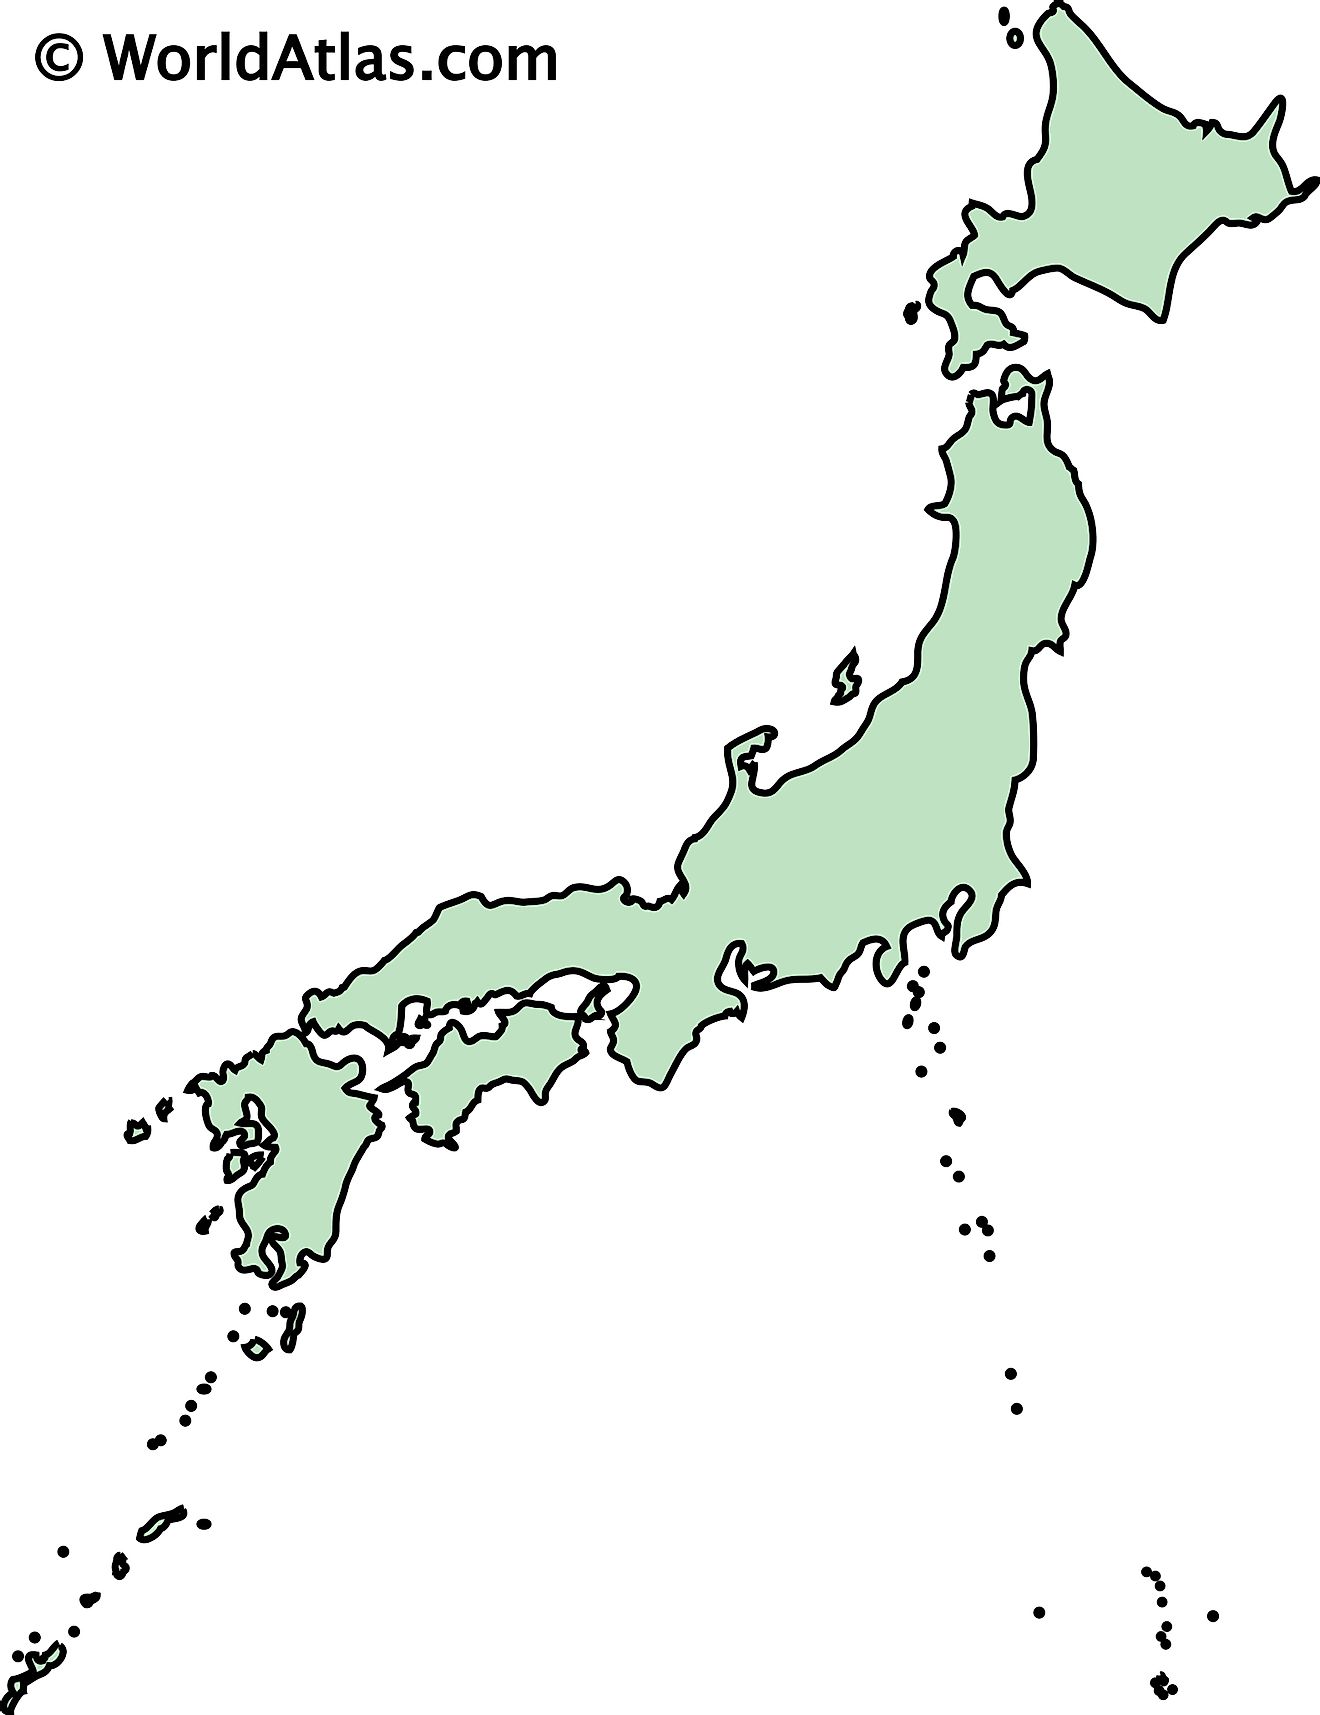 Japan Maps Facts World Atlas